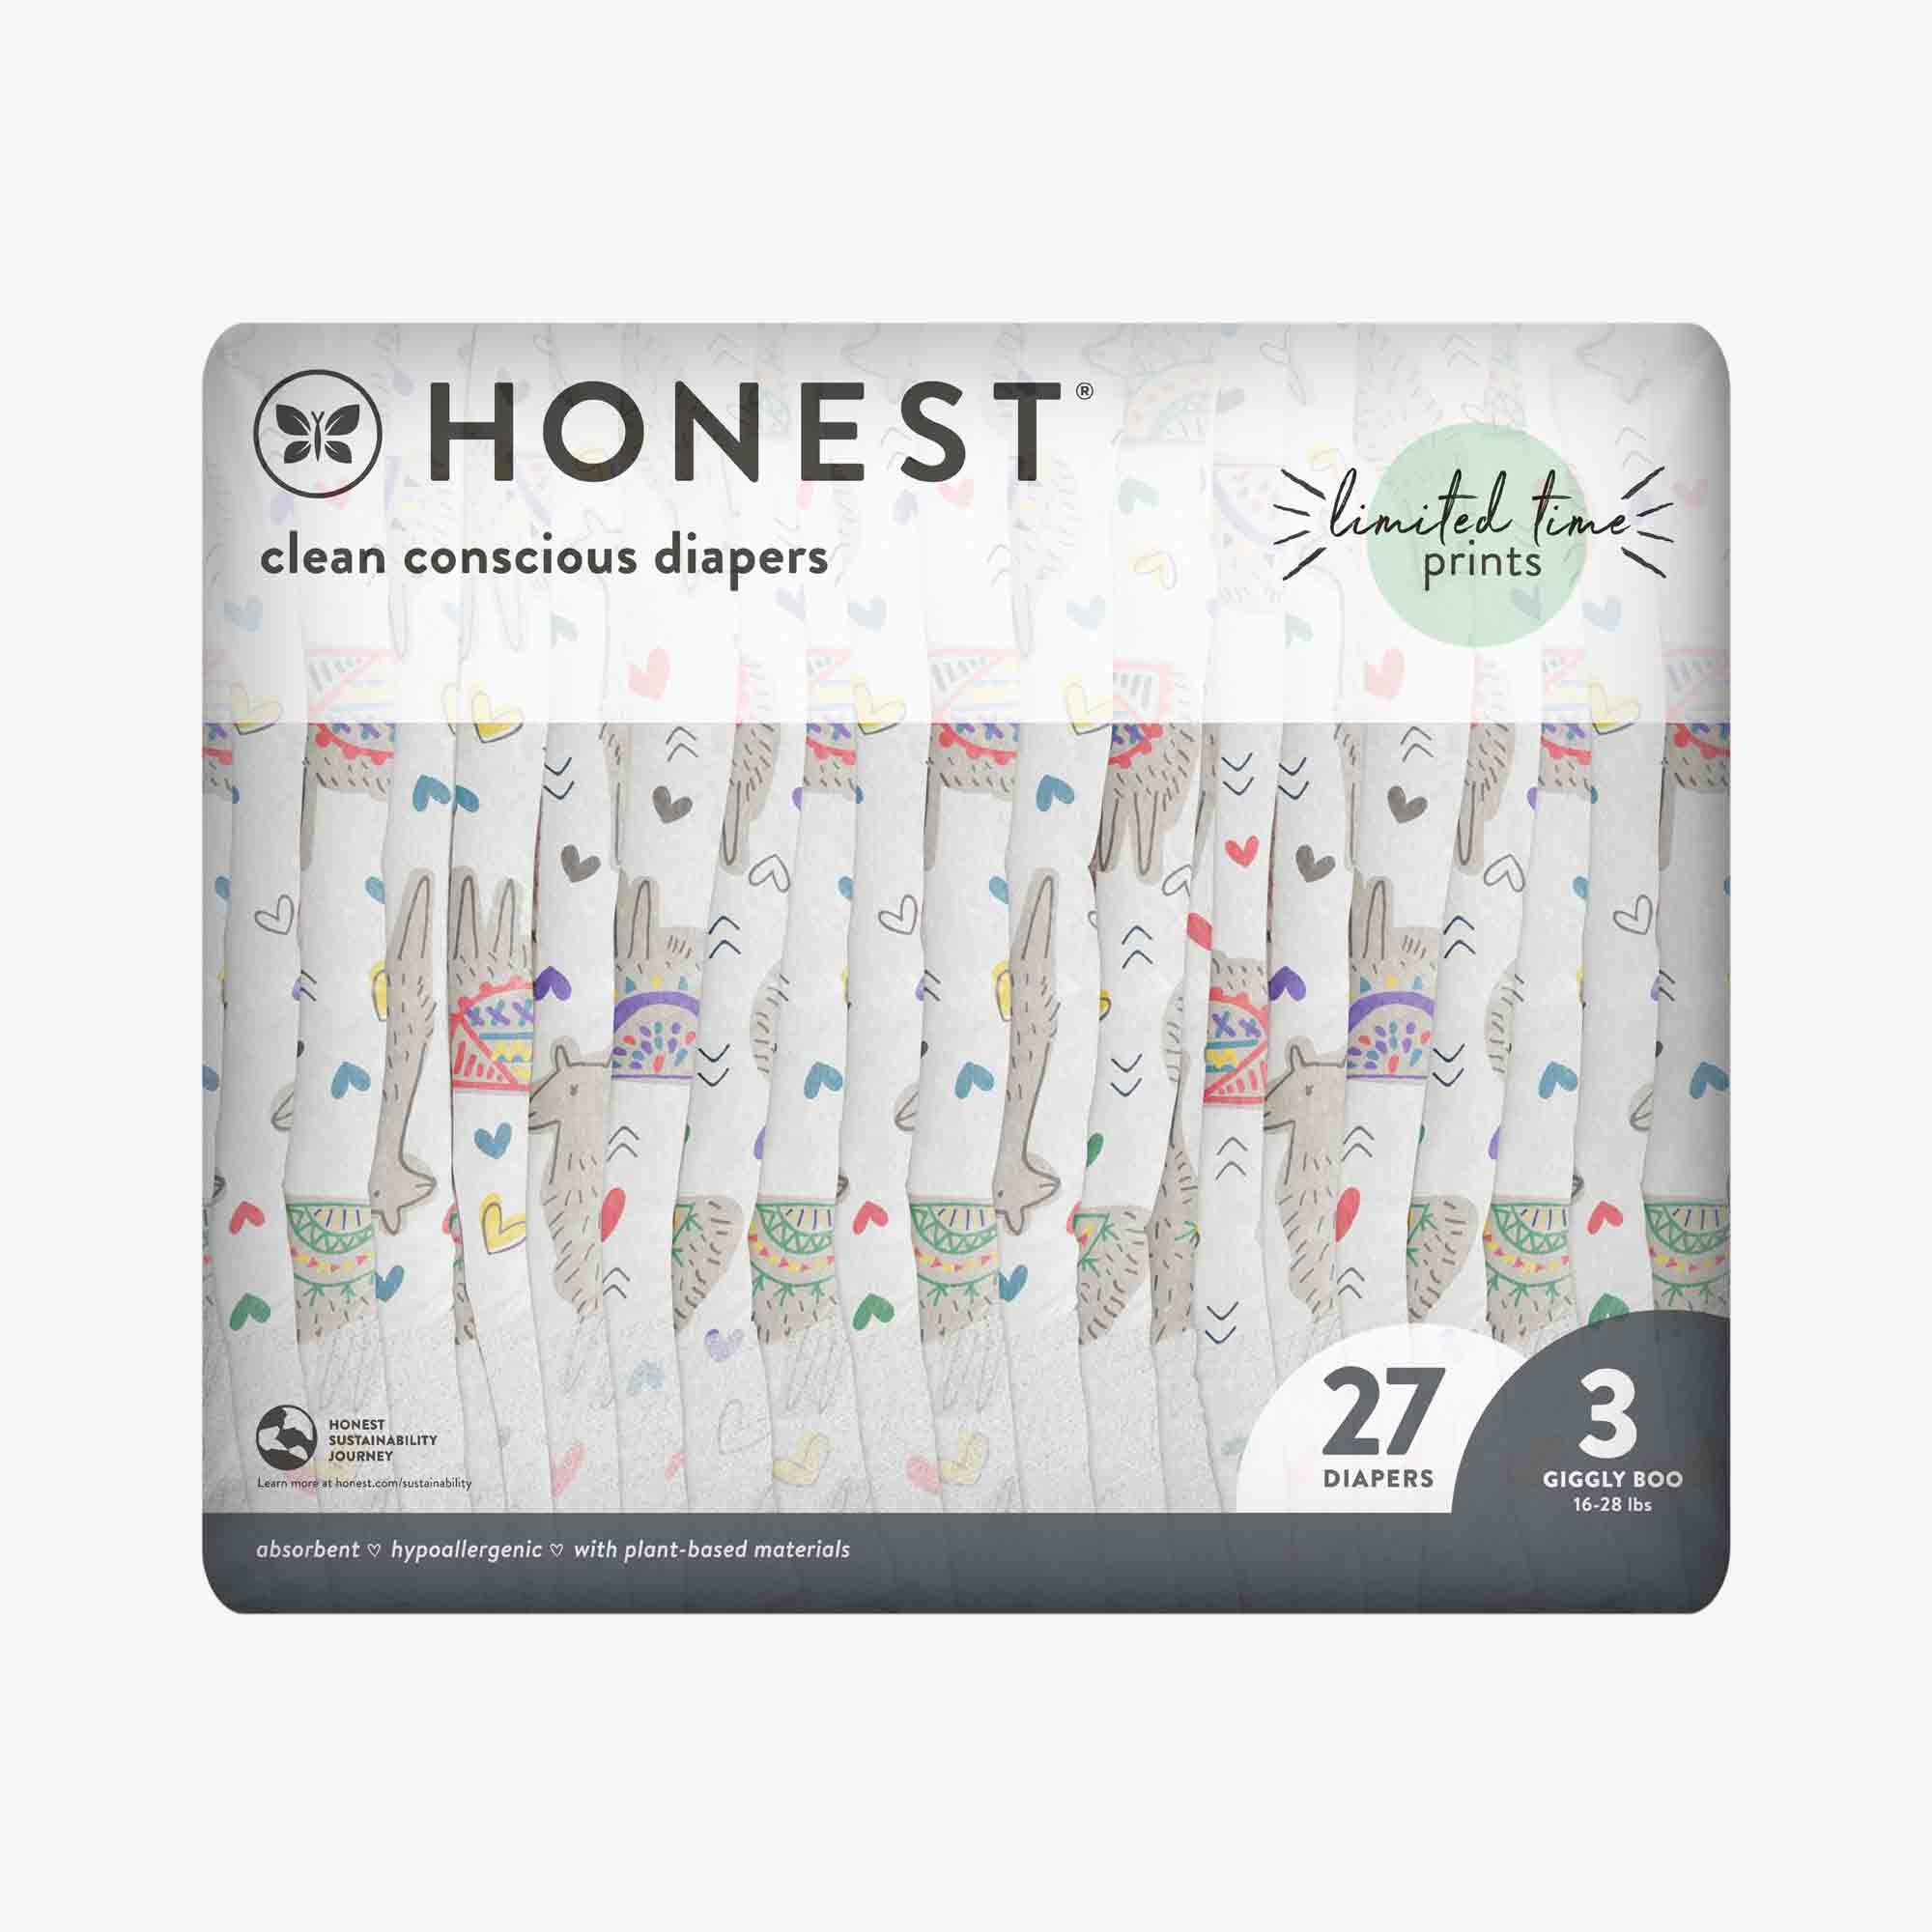 Honest Wetness Indicator Diapers - Plant-Based & Fragrance-Free